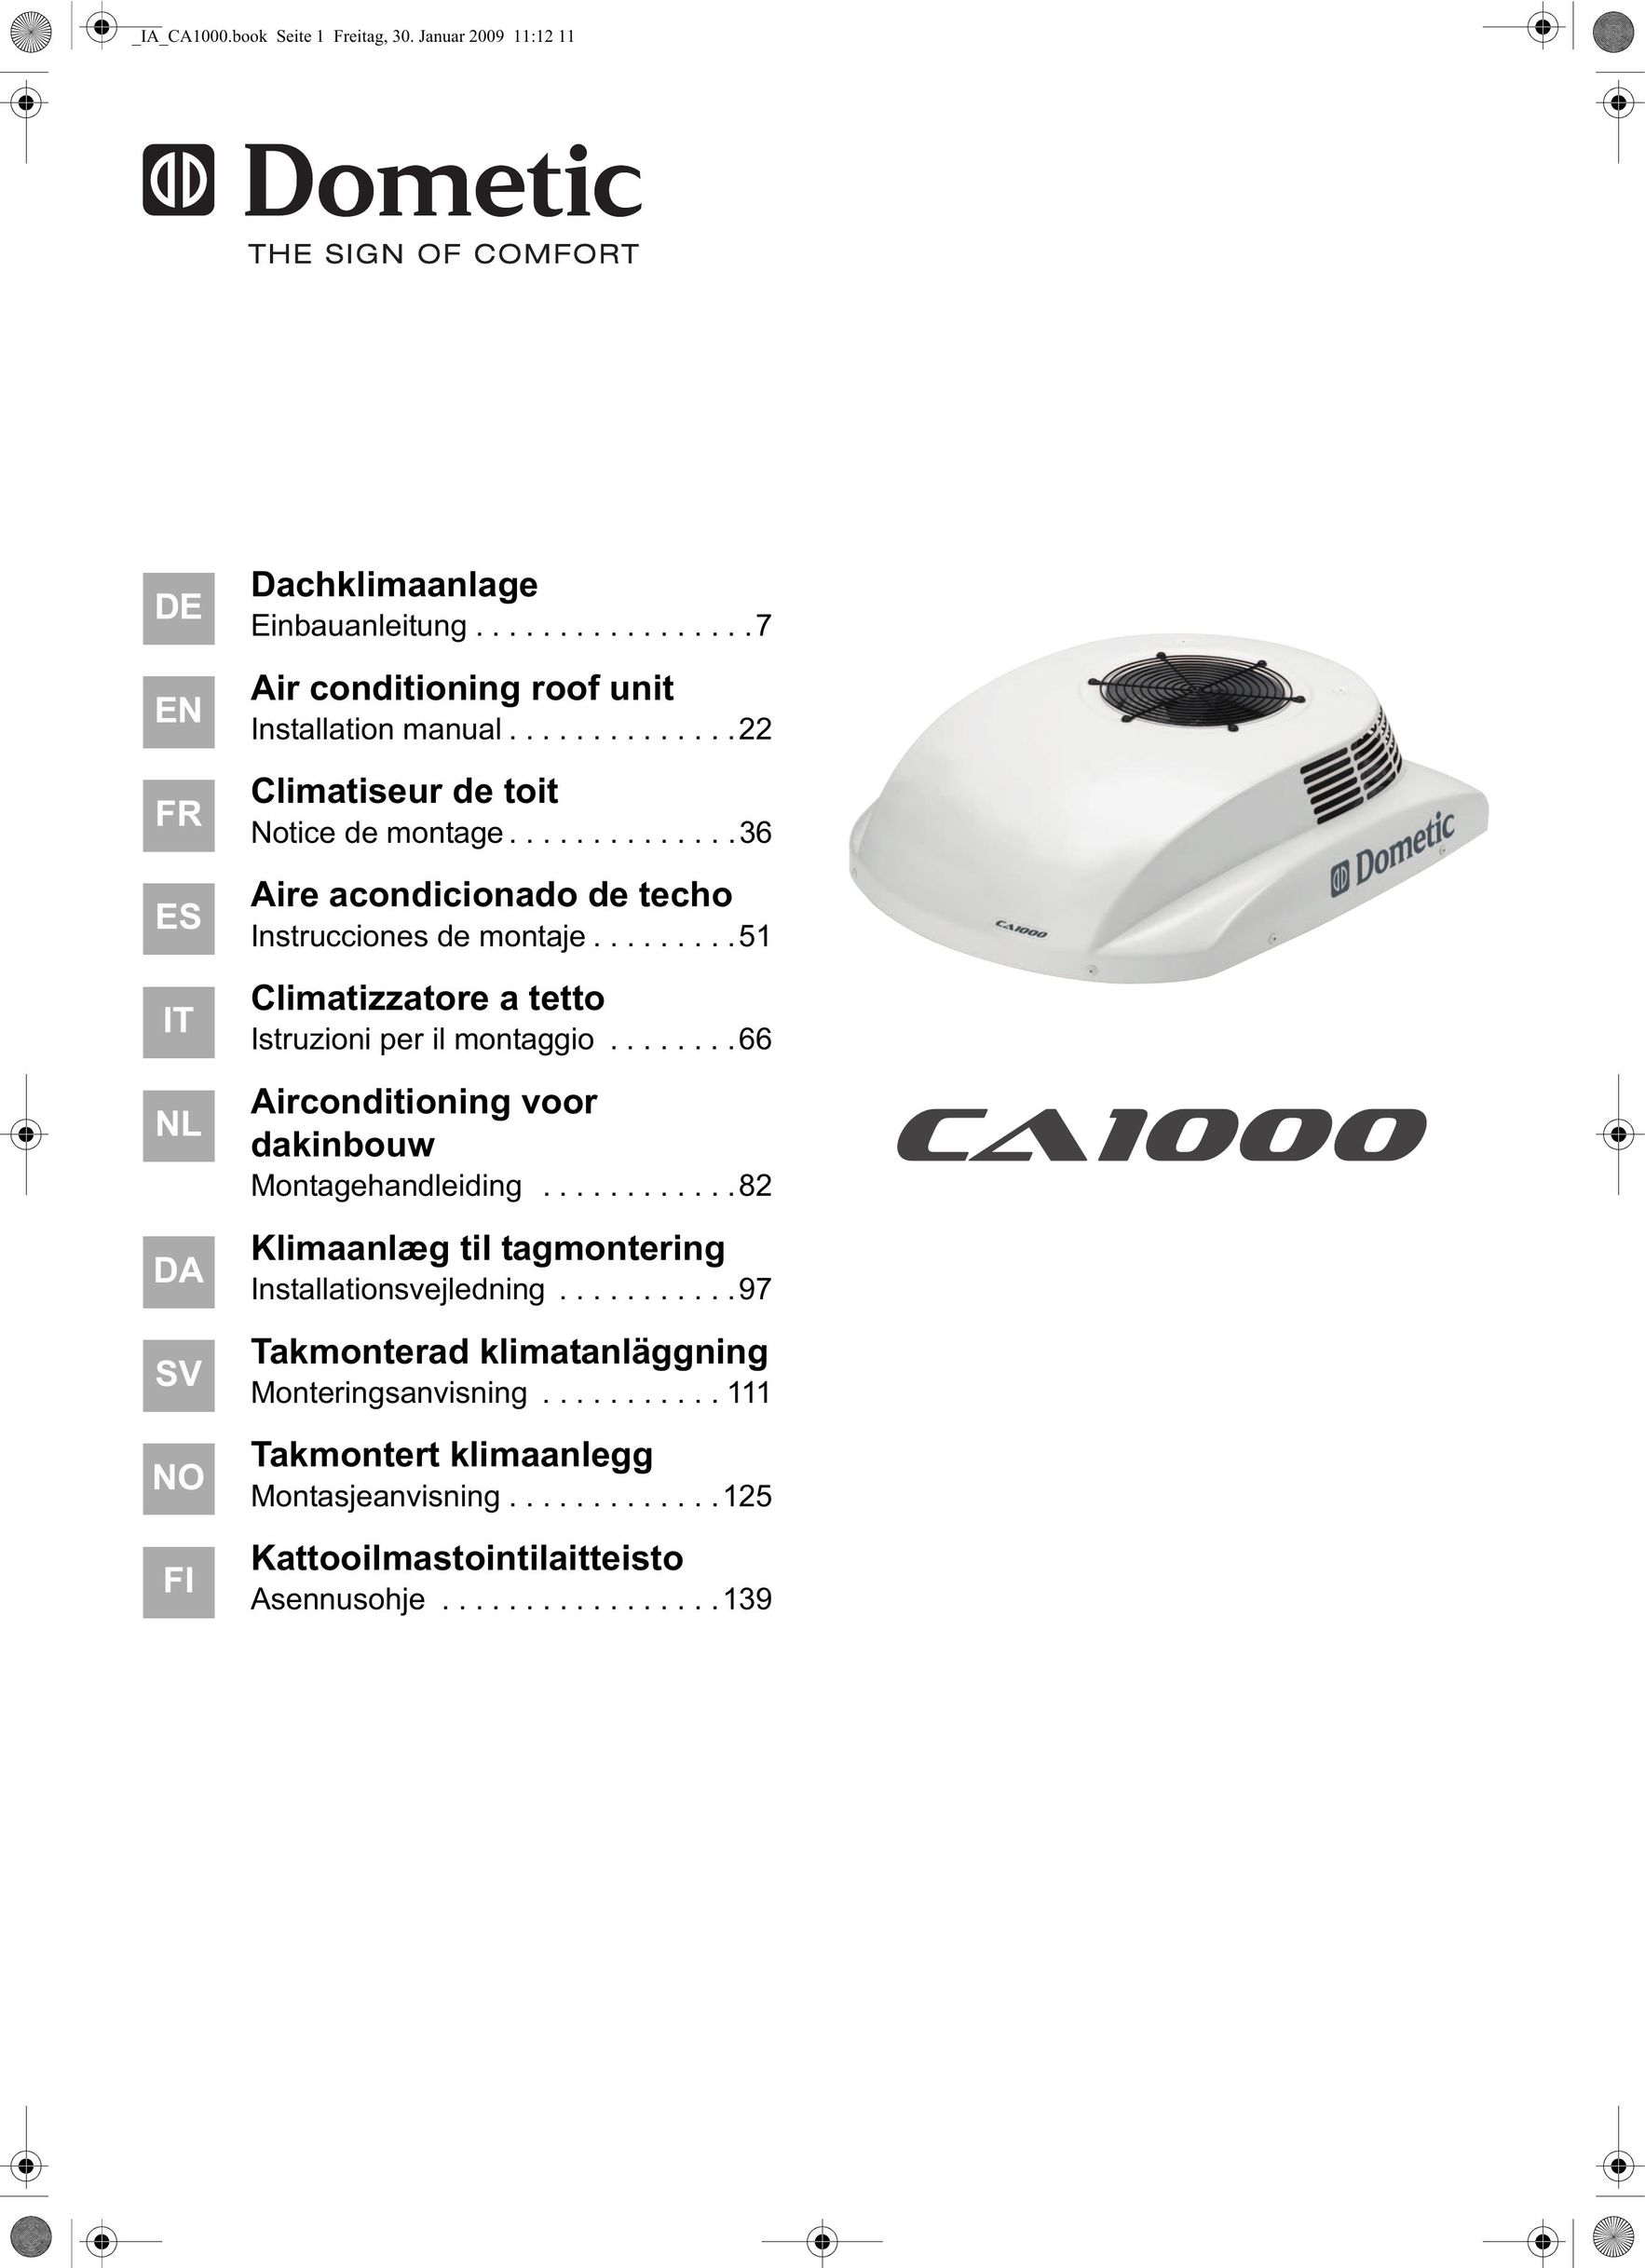 Dometic CA1000 Air Conditioner User Manual